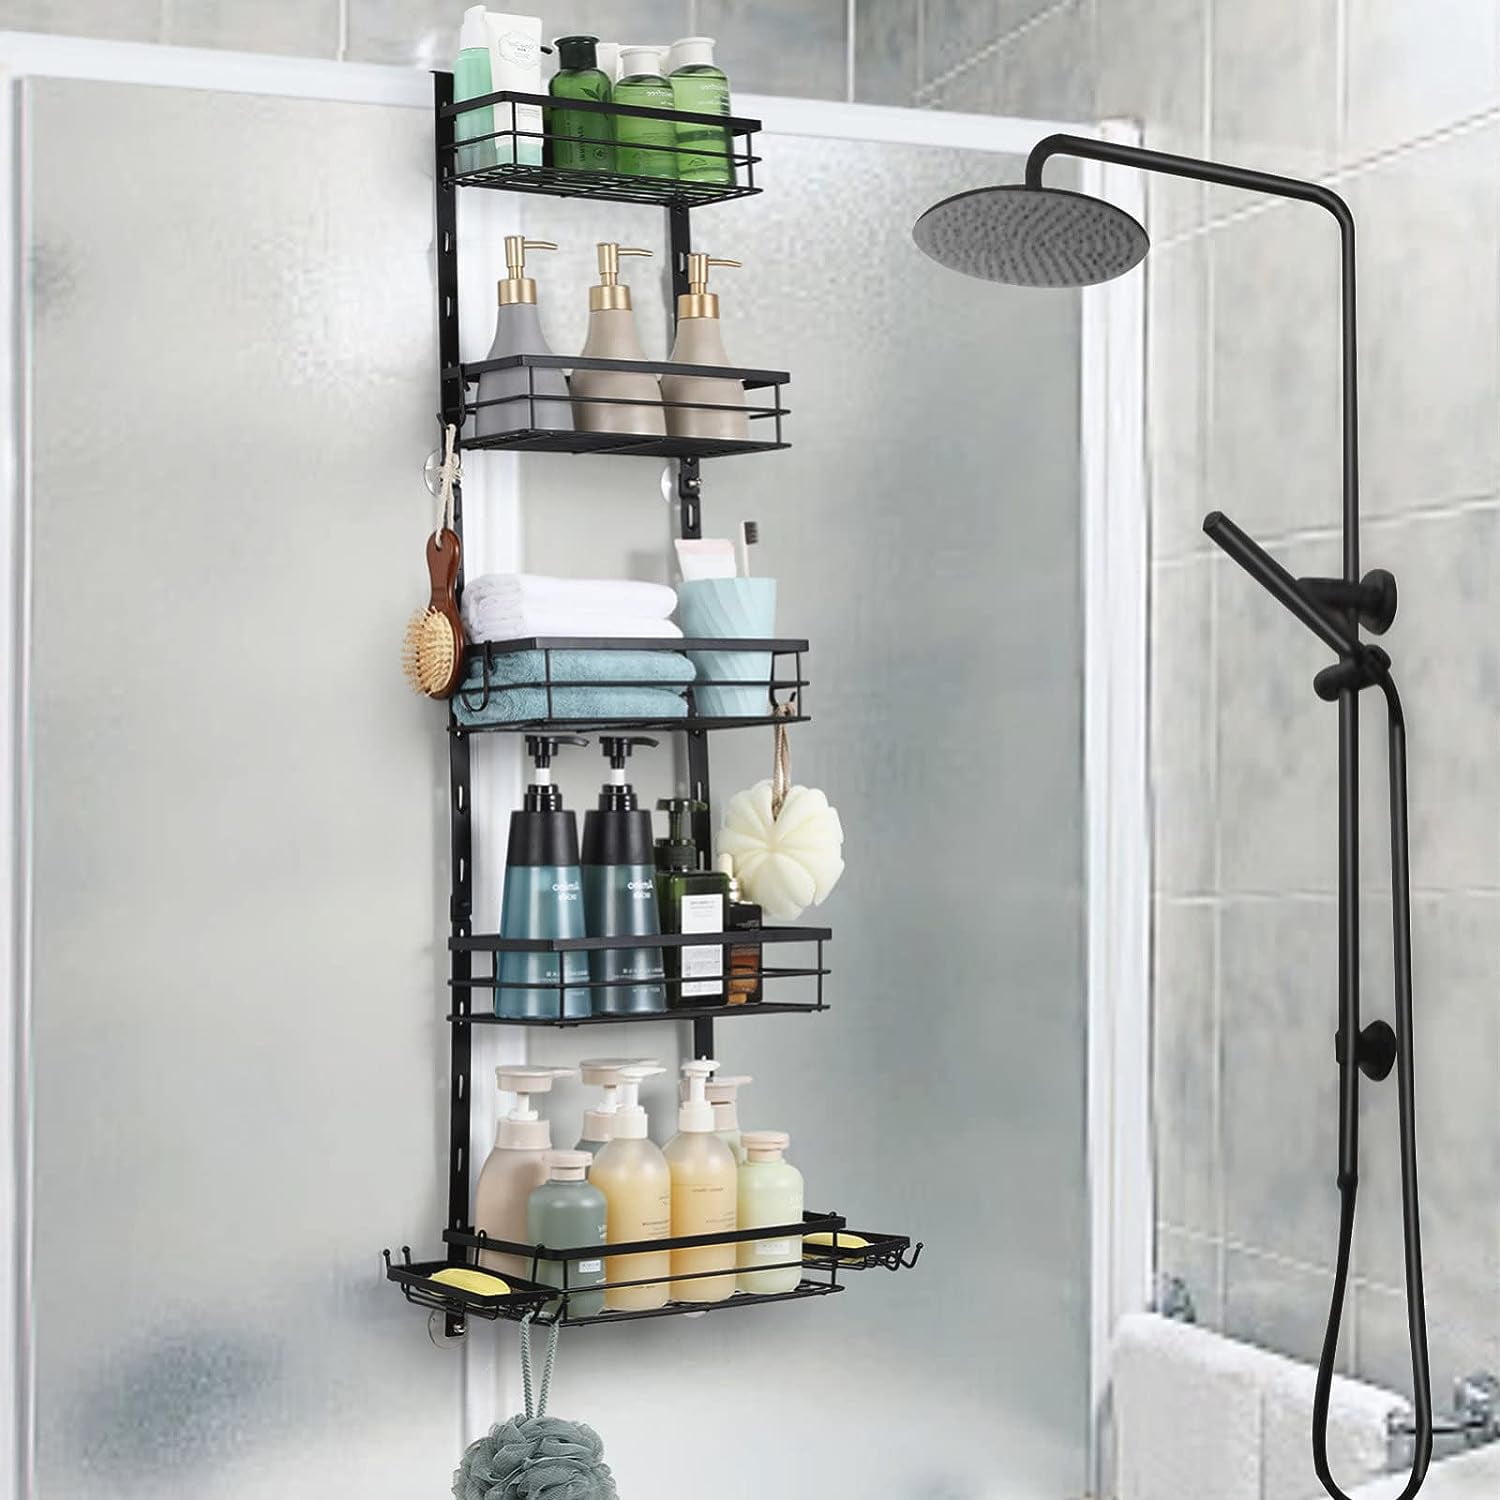 Oumilen Over the Door Shower Caddy, 3-Tier Hanging Shower Organizer Shelf,  Silver PSHKS155 - The Home Depot